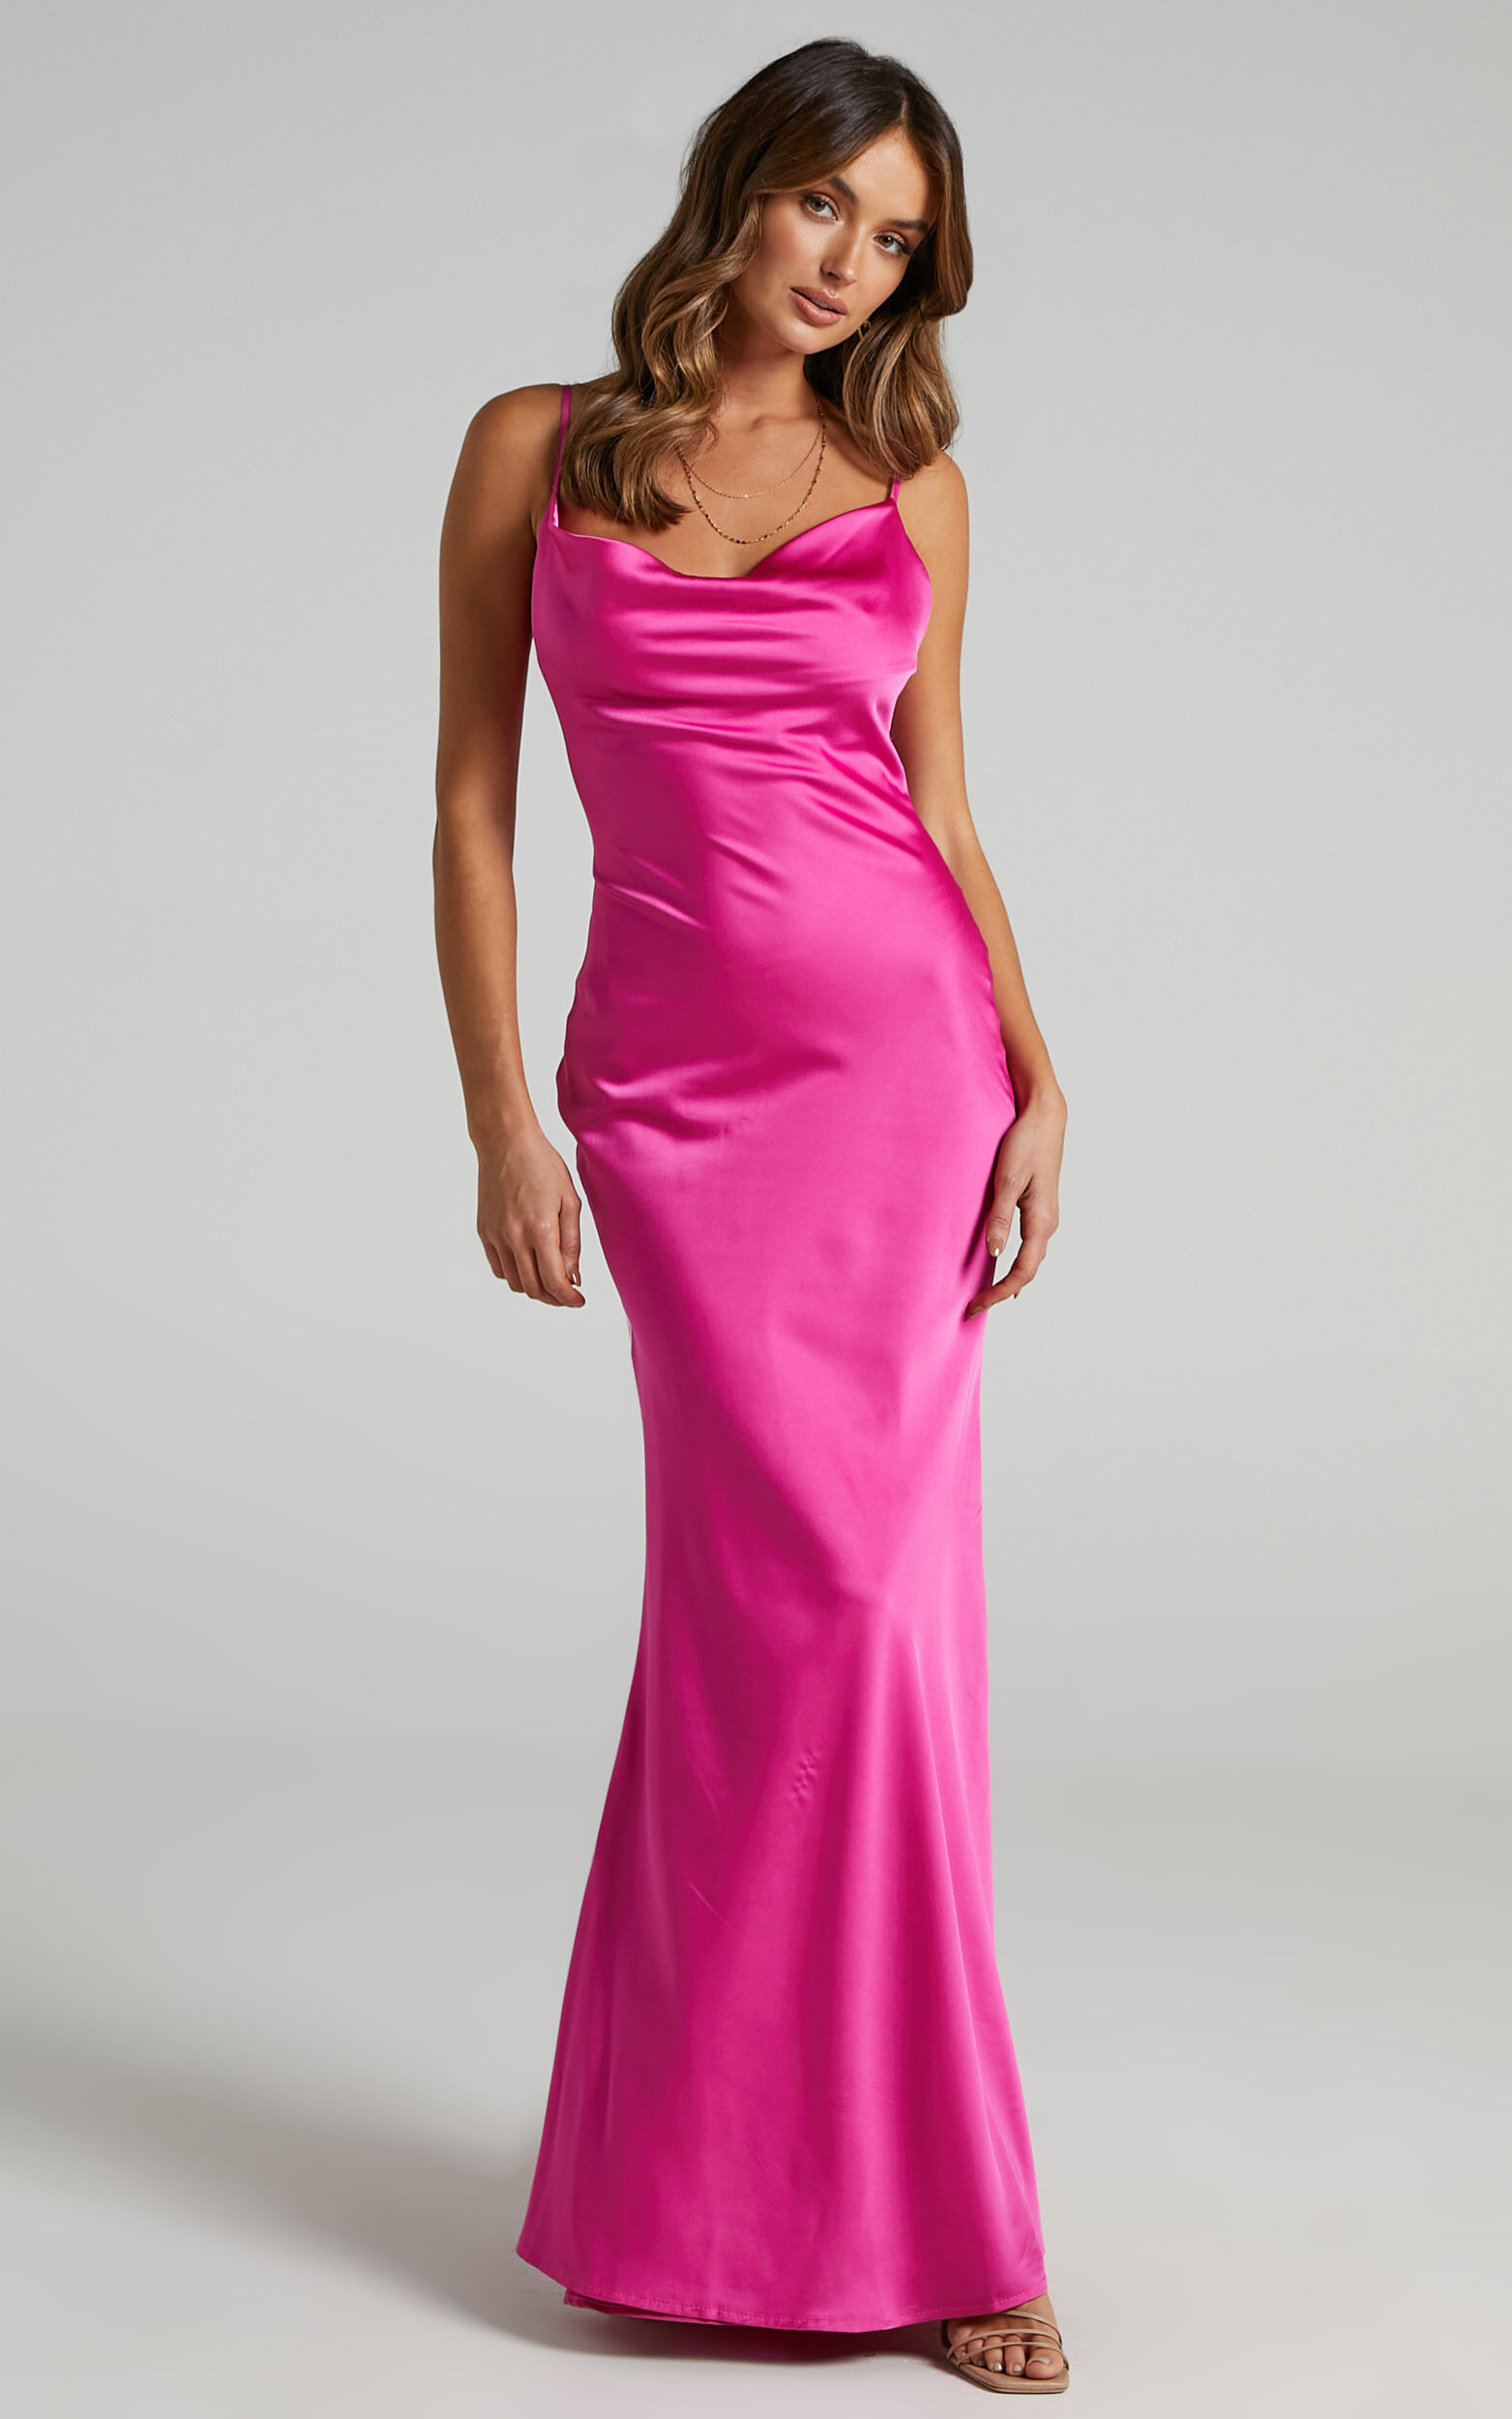 Lunaria Midaxi Dress - Cowl Mermaid Slip Dress in Hot Pink Satin - 06, PNK1